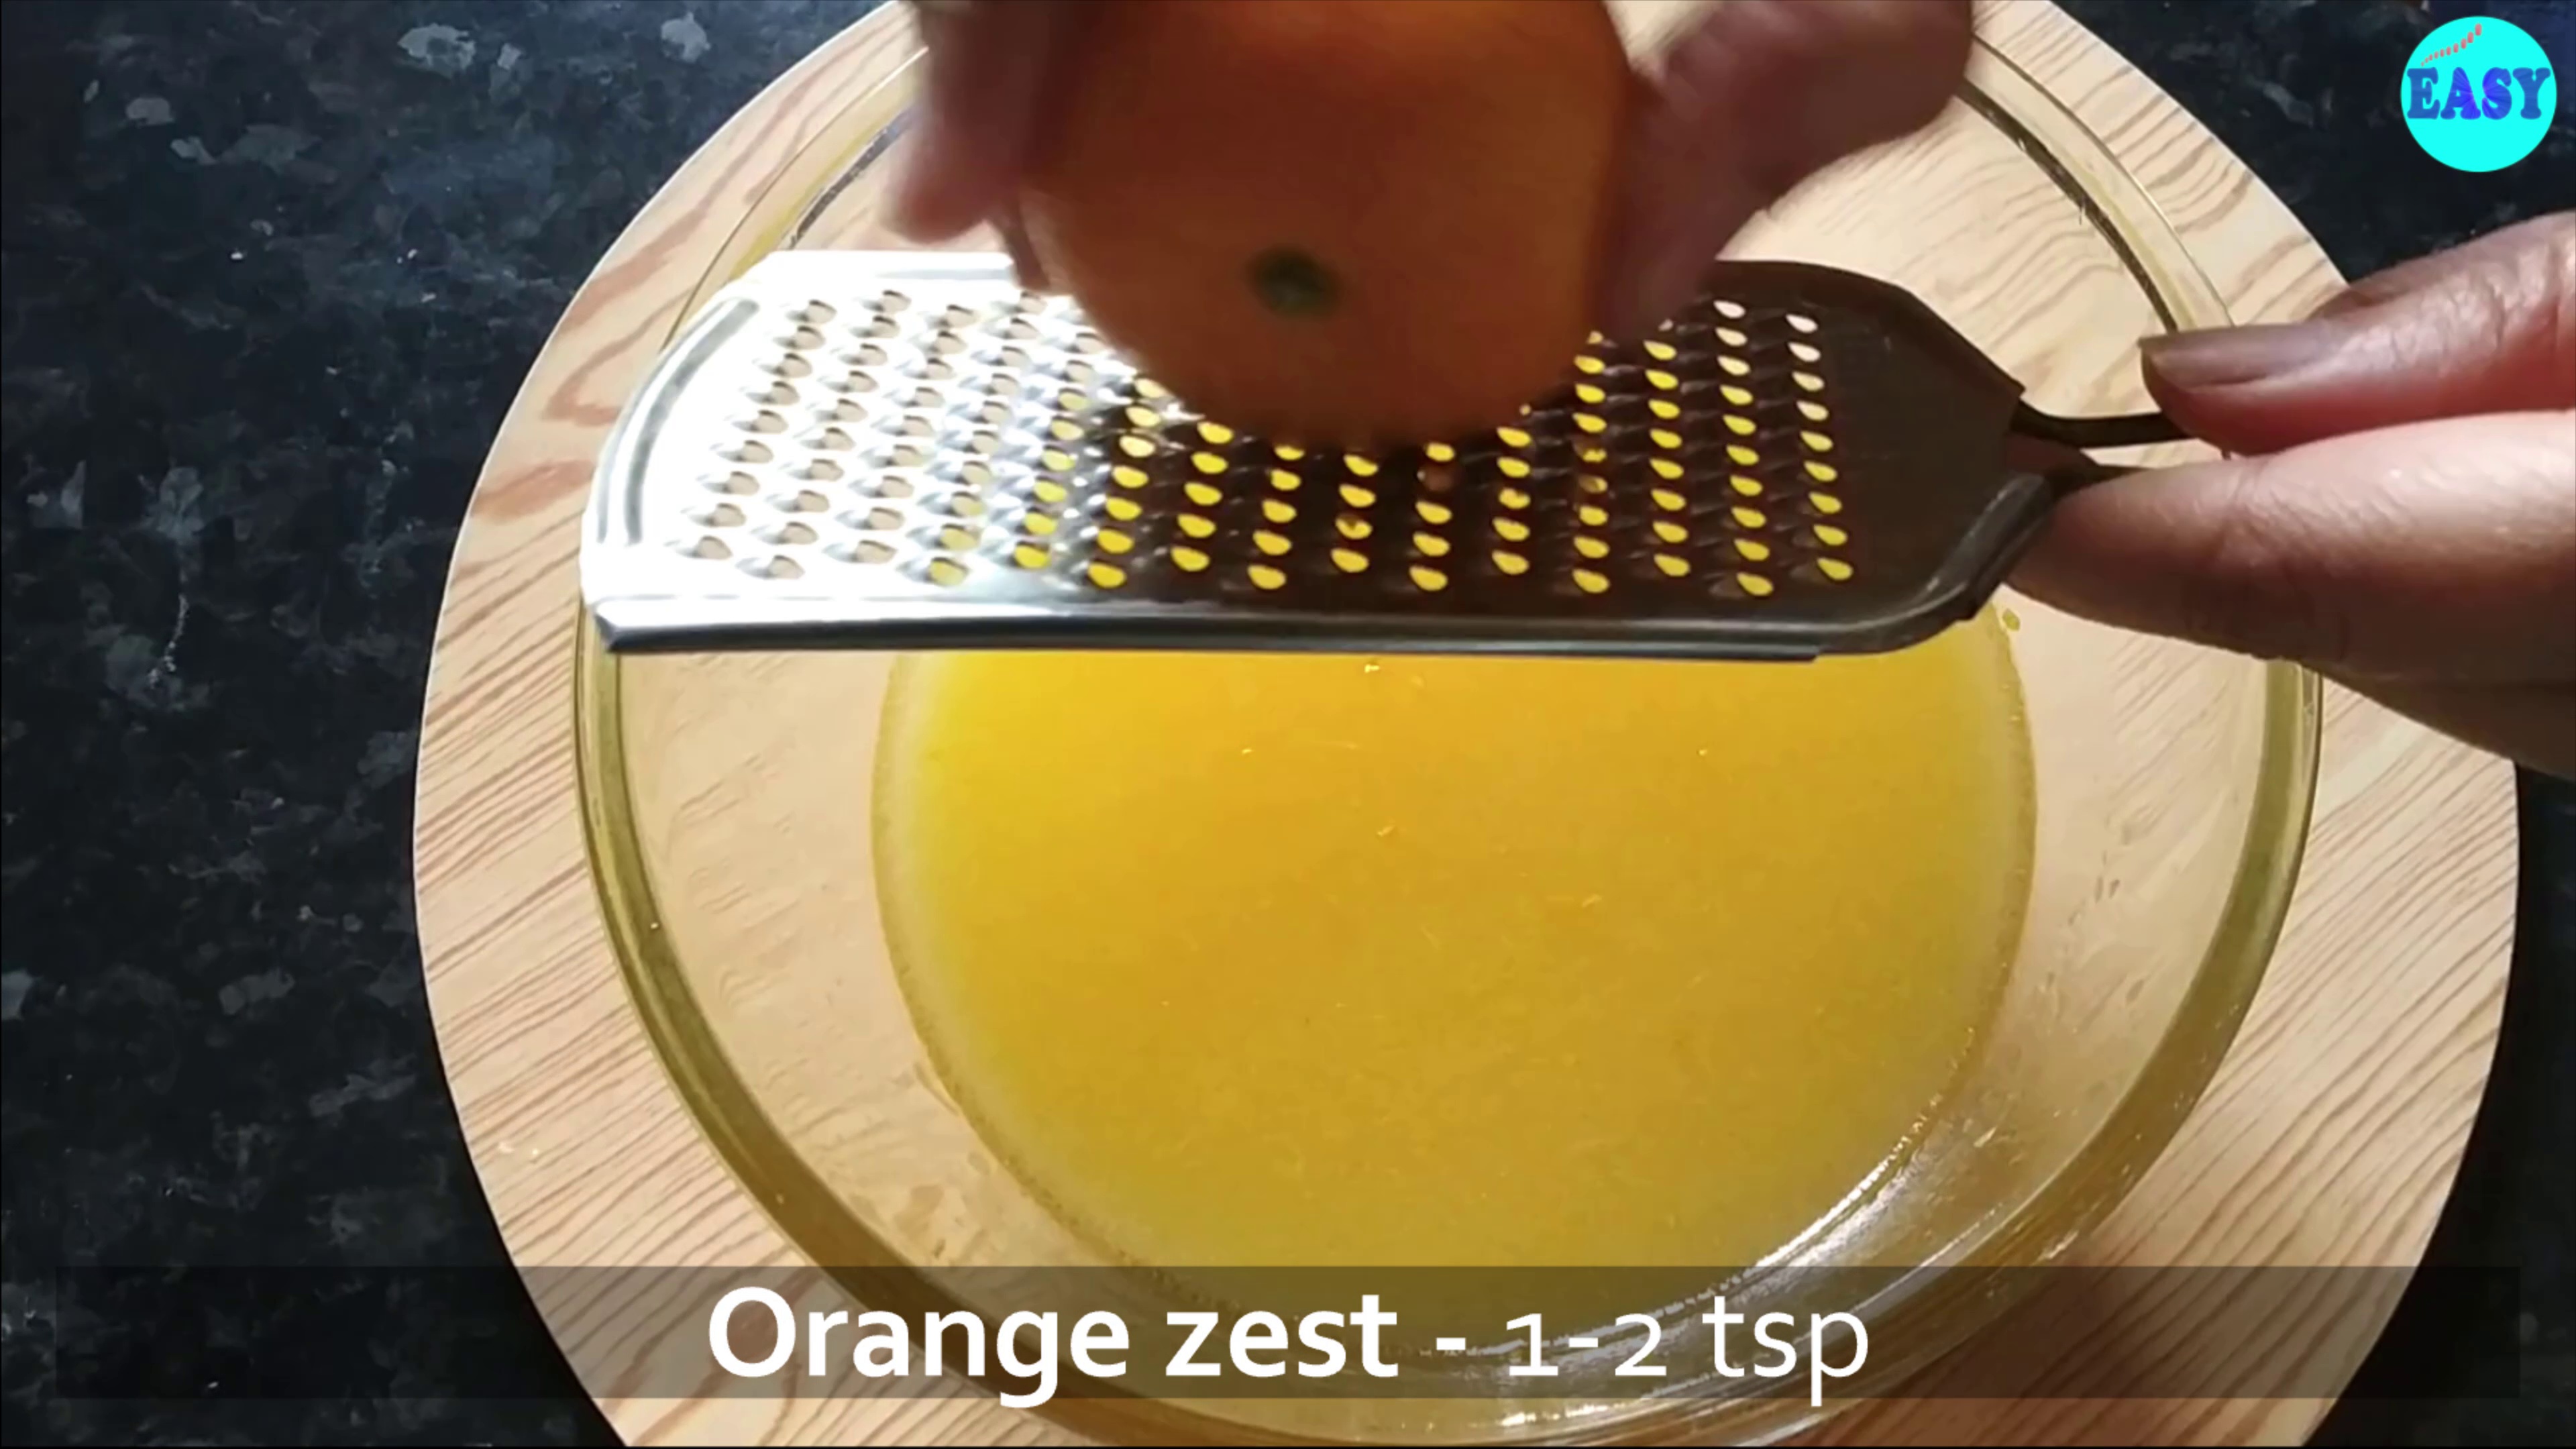 Step 2 - Now add orange zest and orange extract if using.